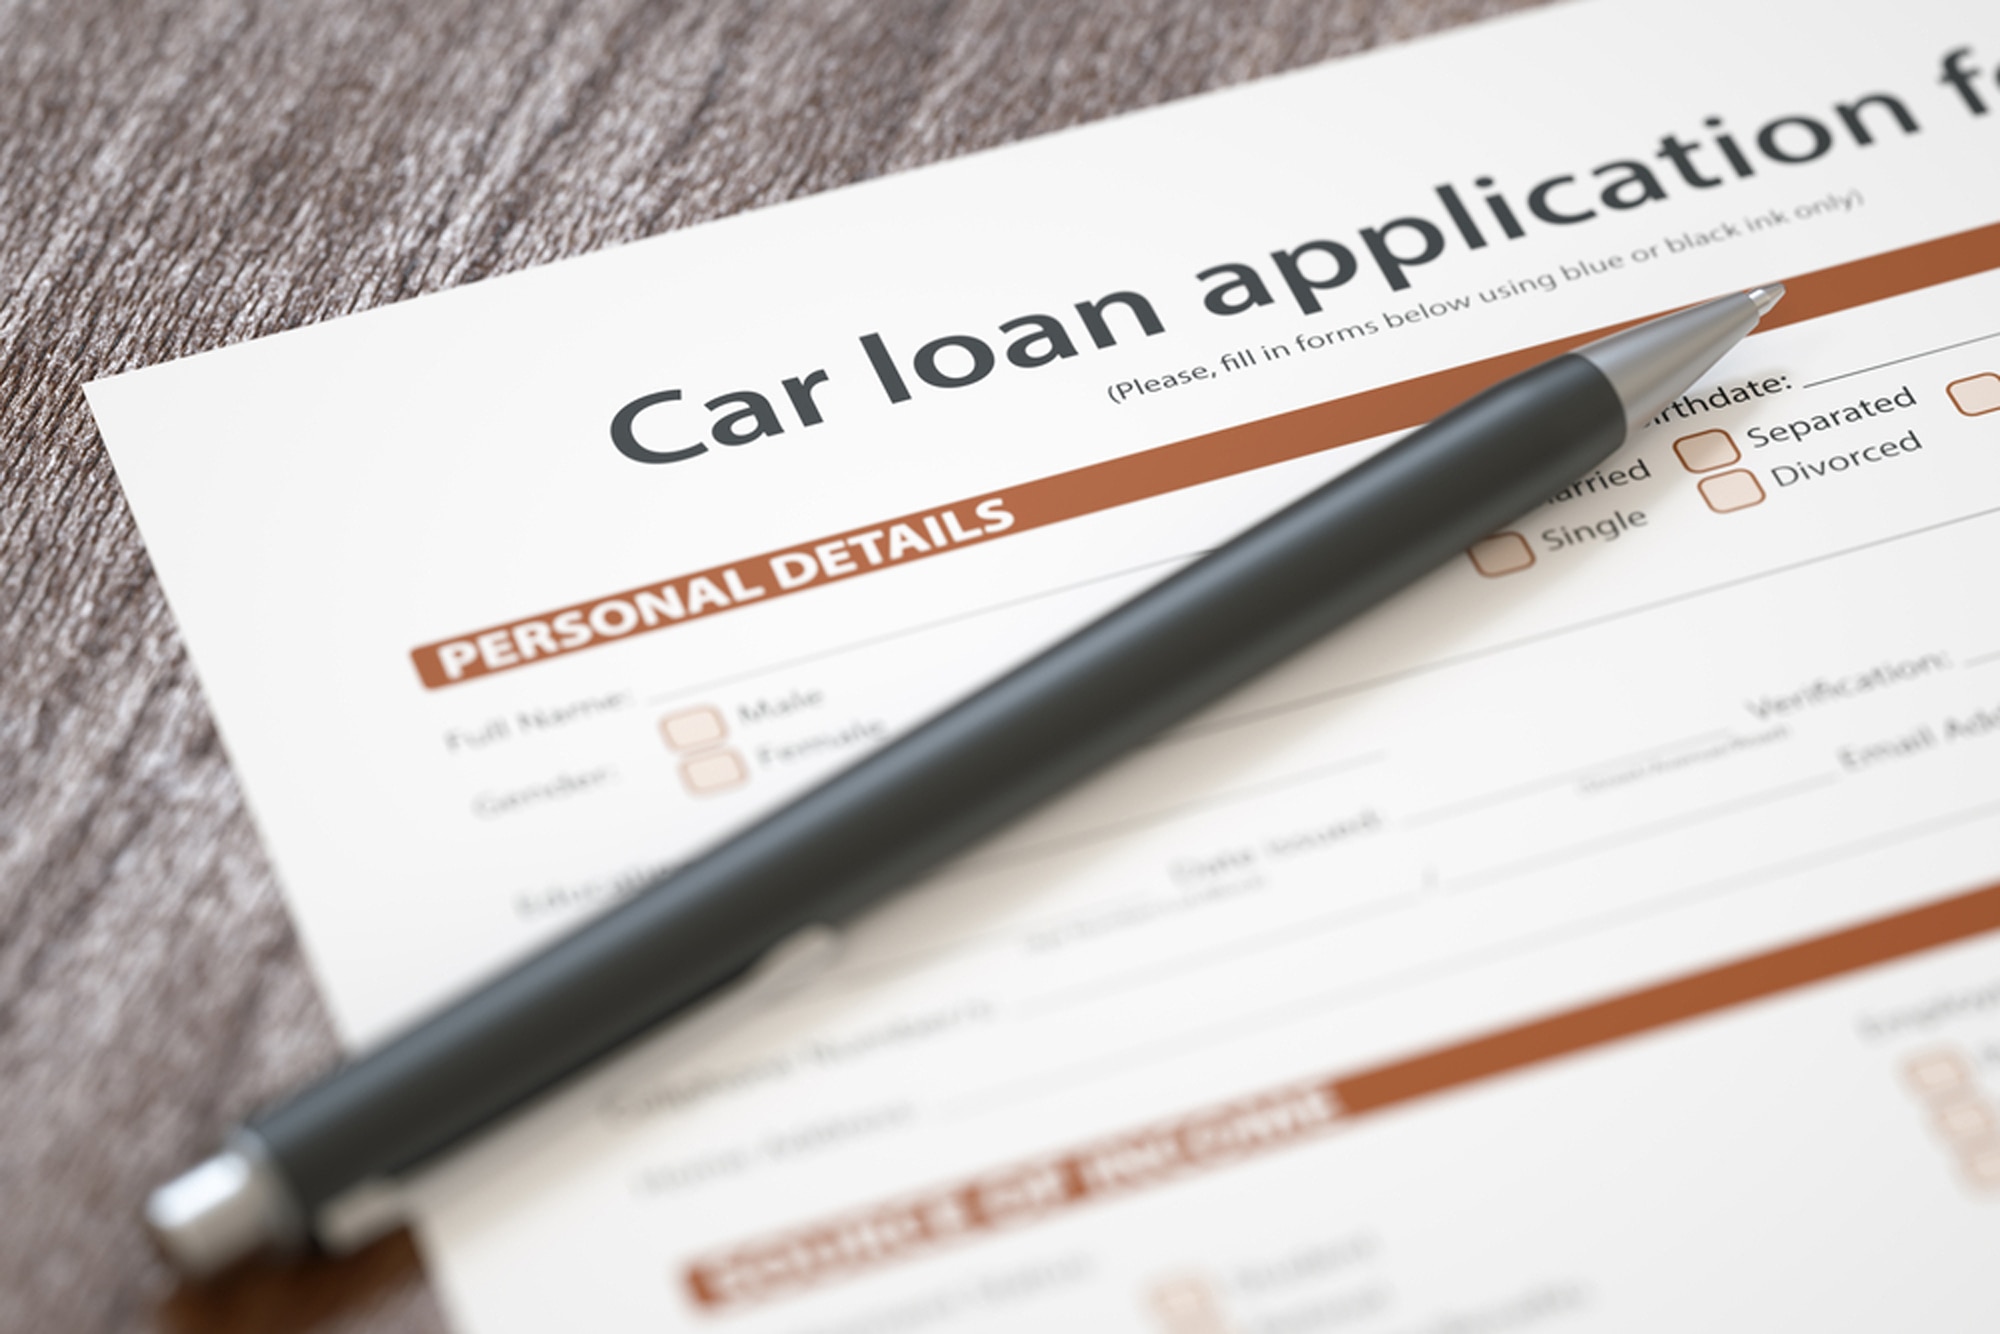 Car loan application